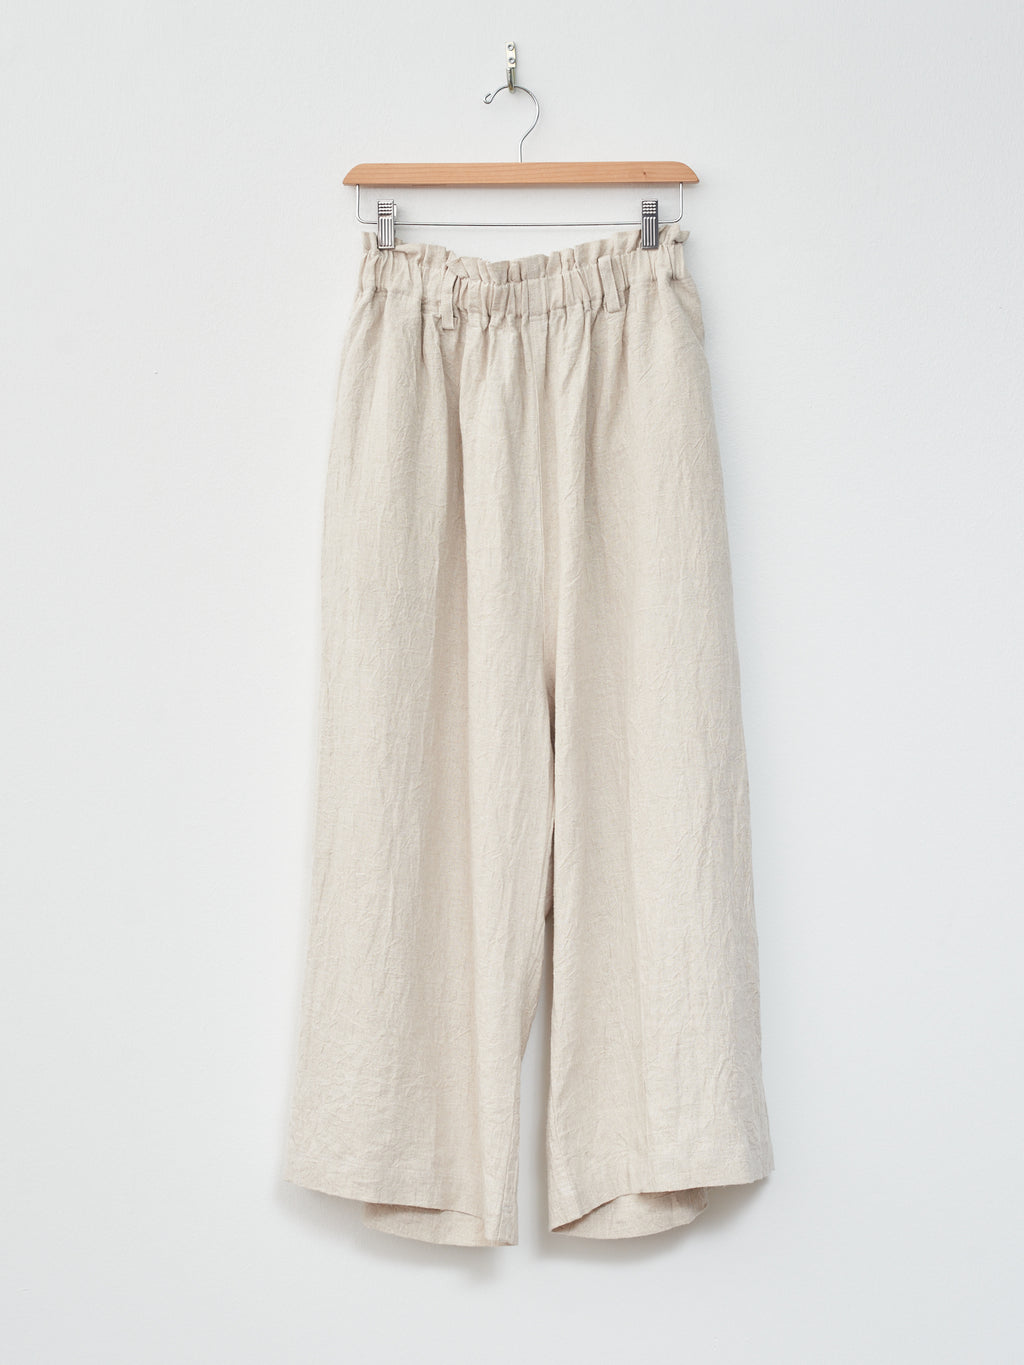 Namu Shop - Ichi Antiquites Linen Vintage Pants - Natural